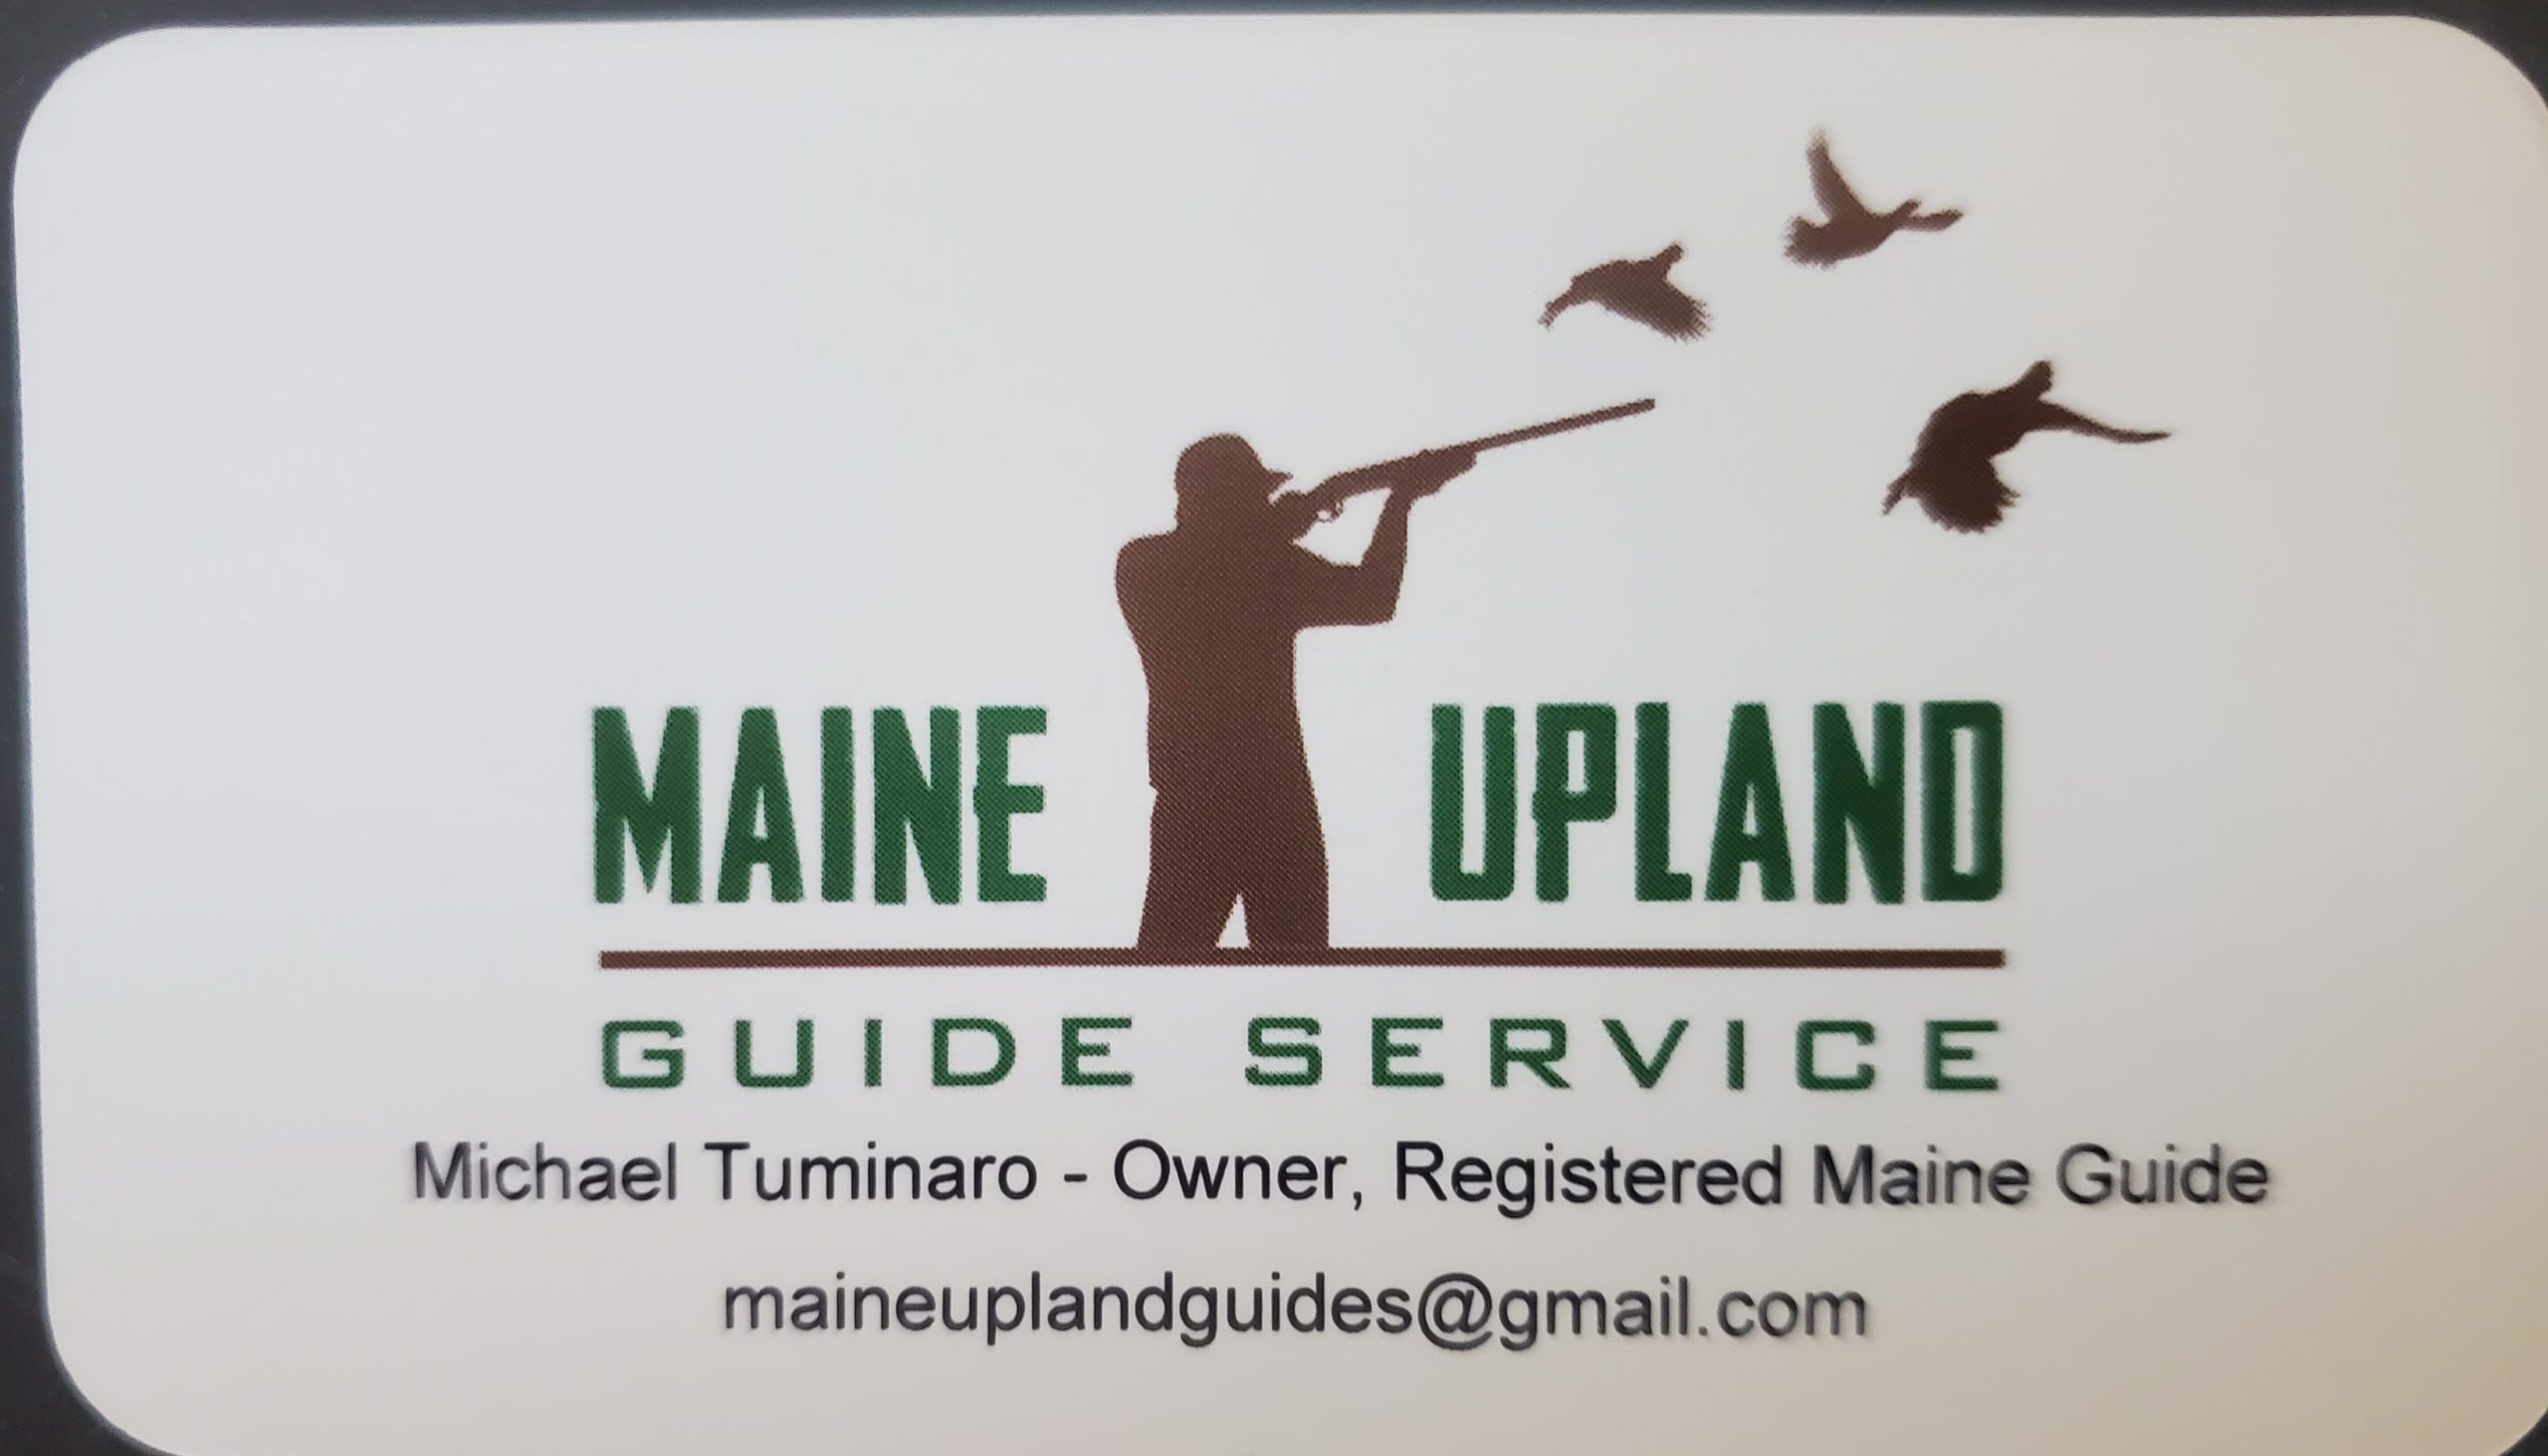 Maine Upland Guide Service